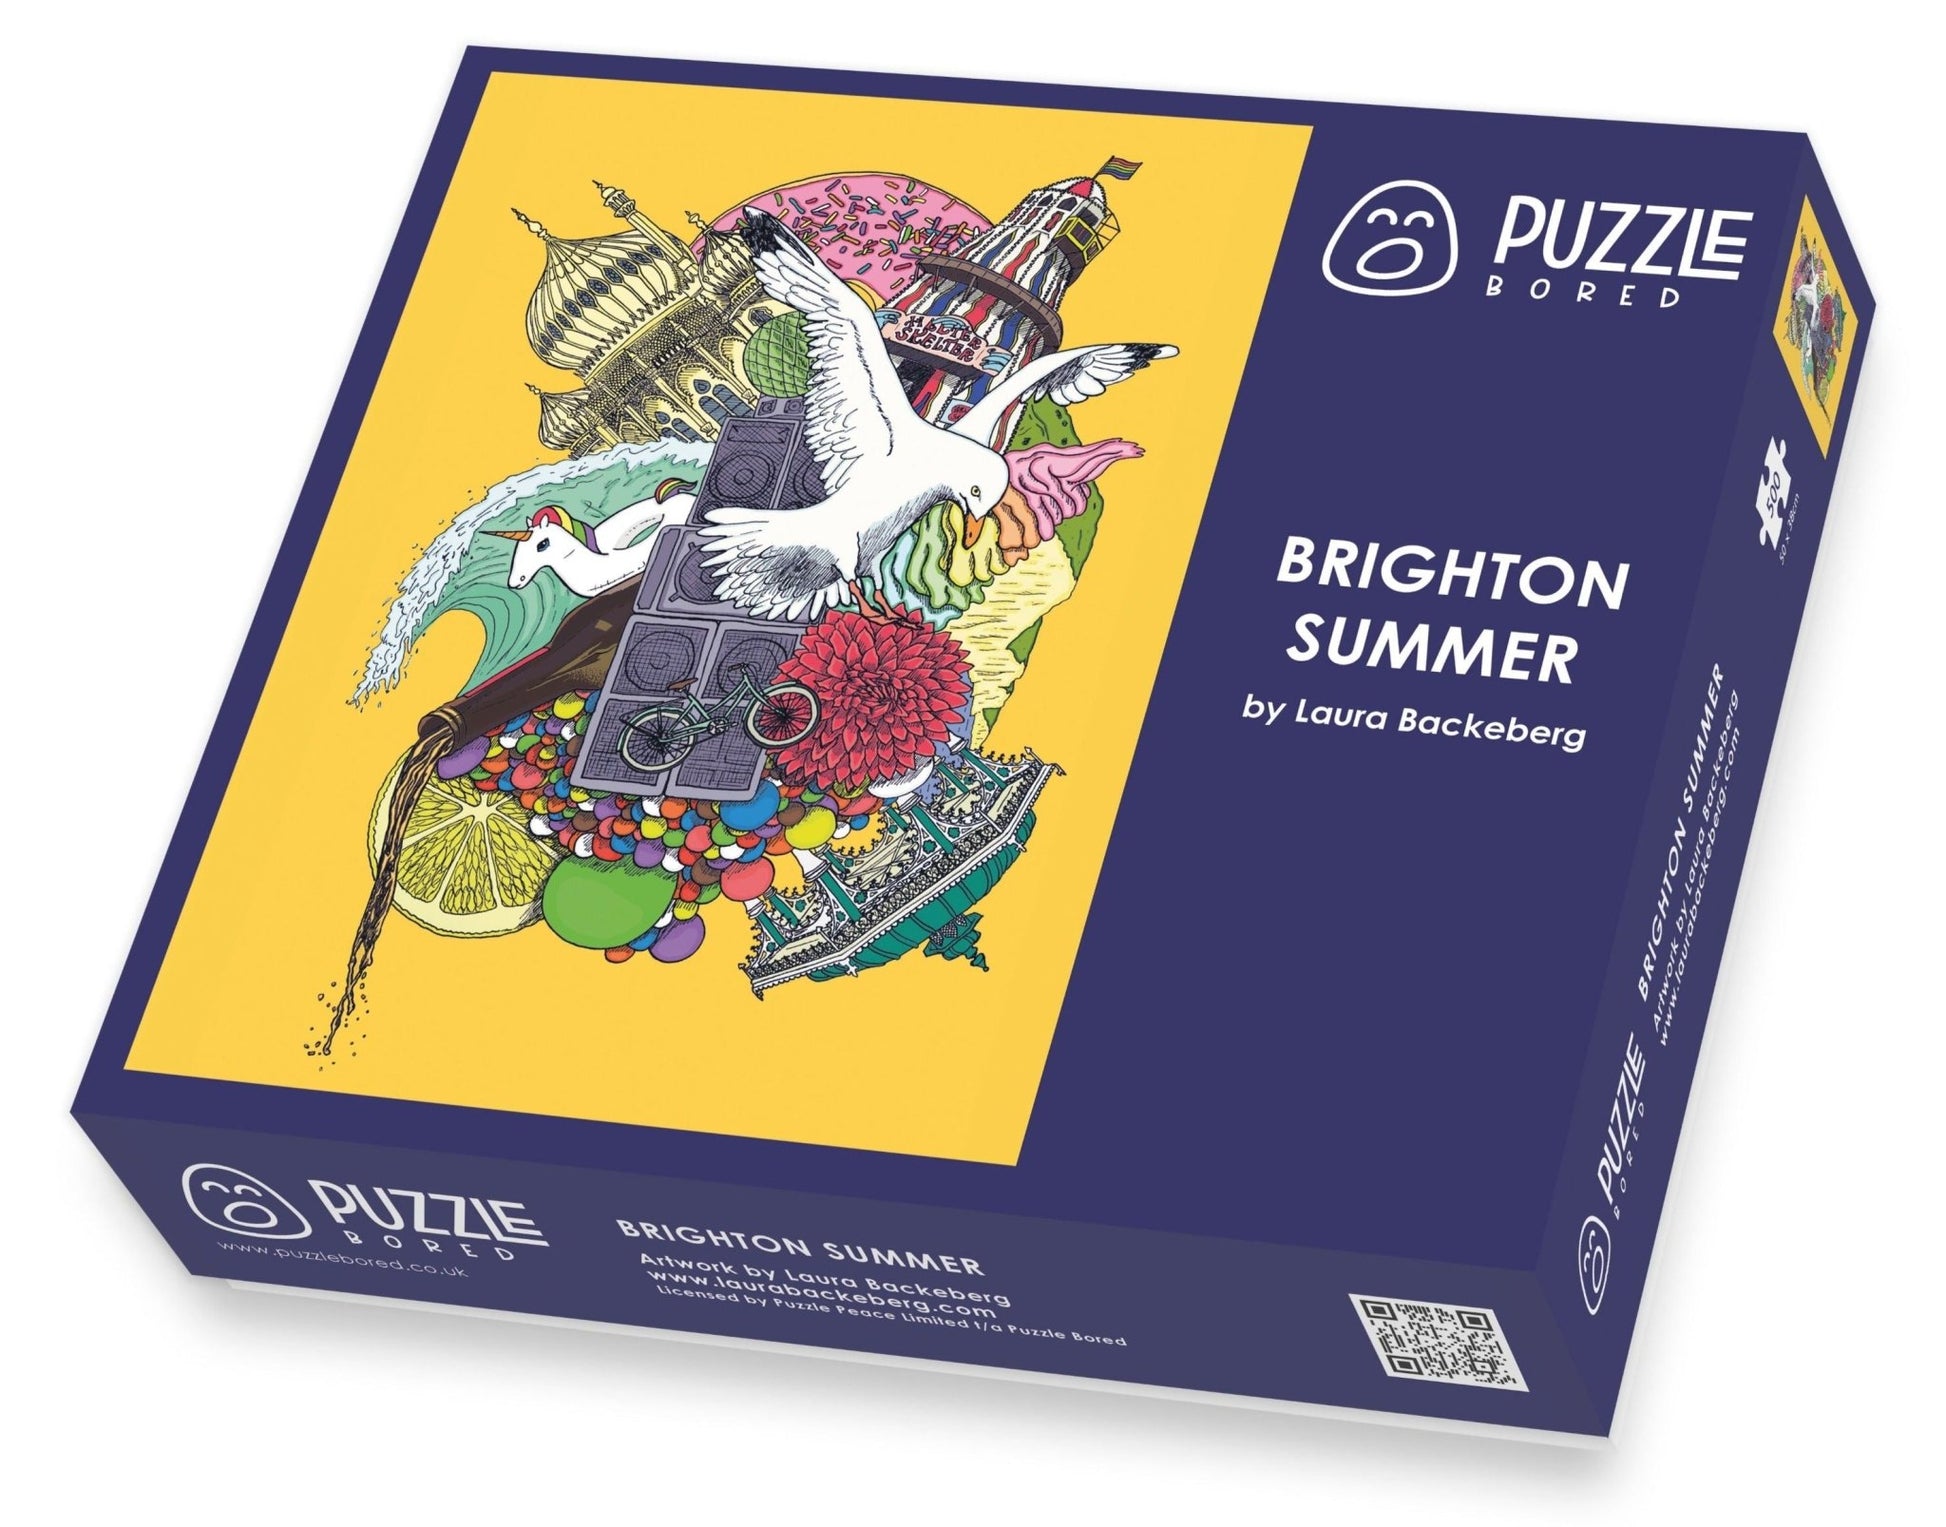 Brighton Summer by Laura Backeberg - Puzzle Bored